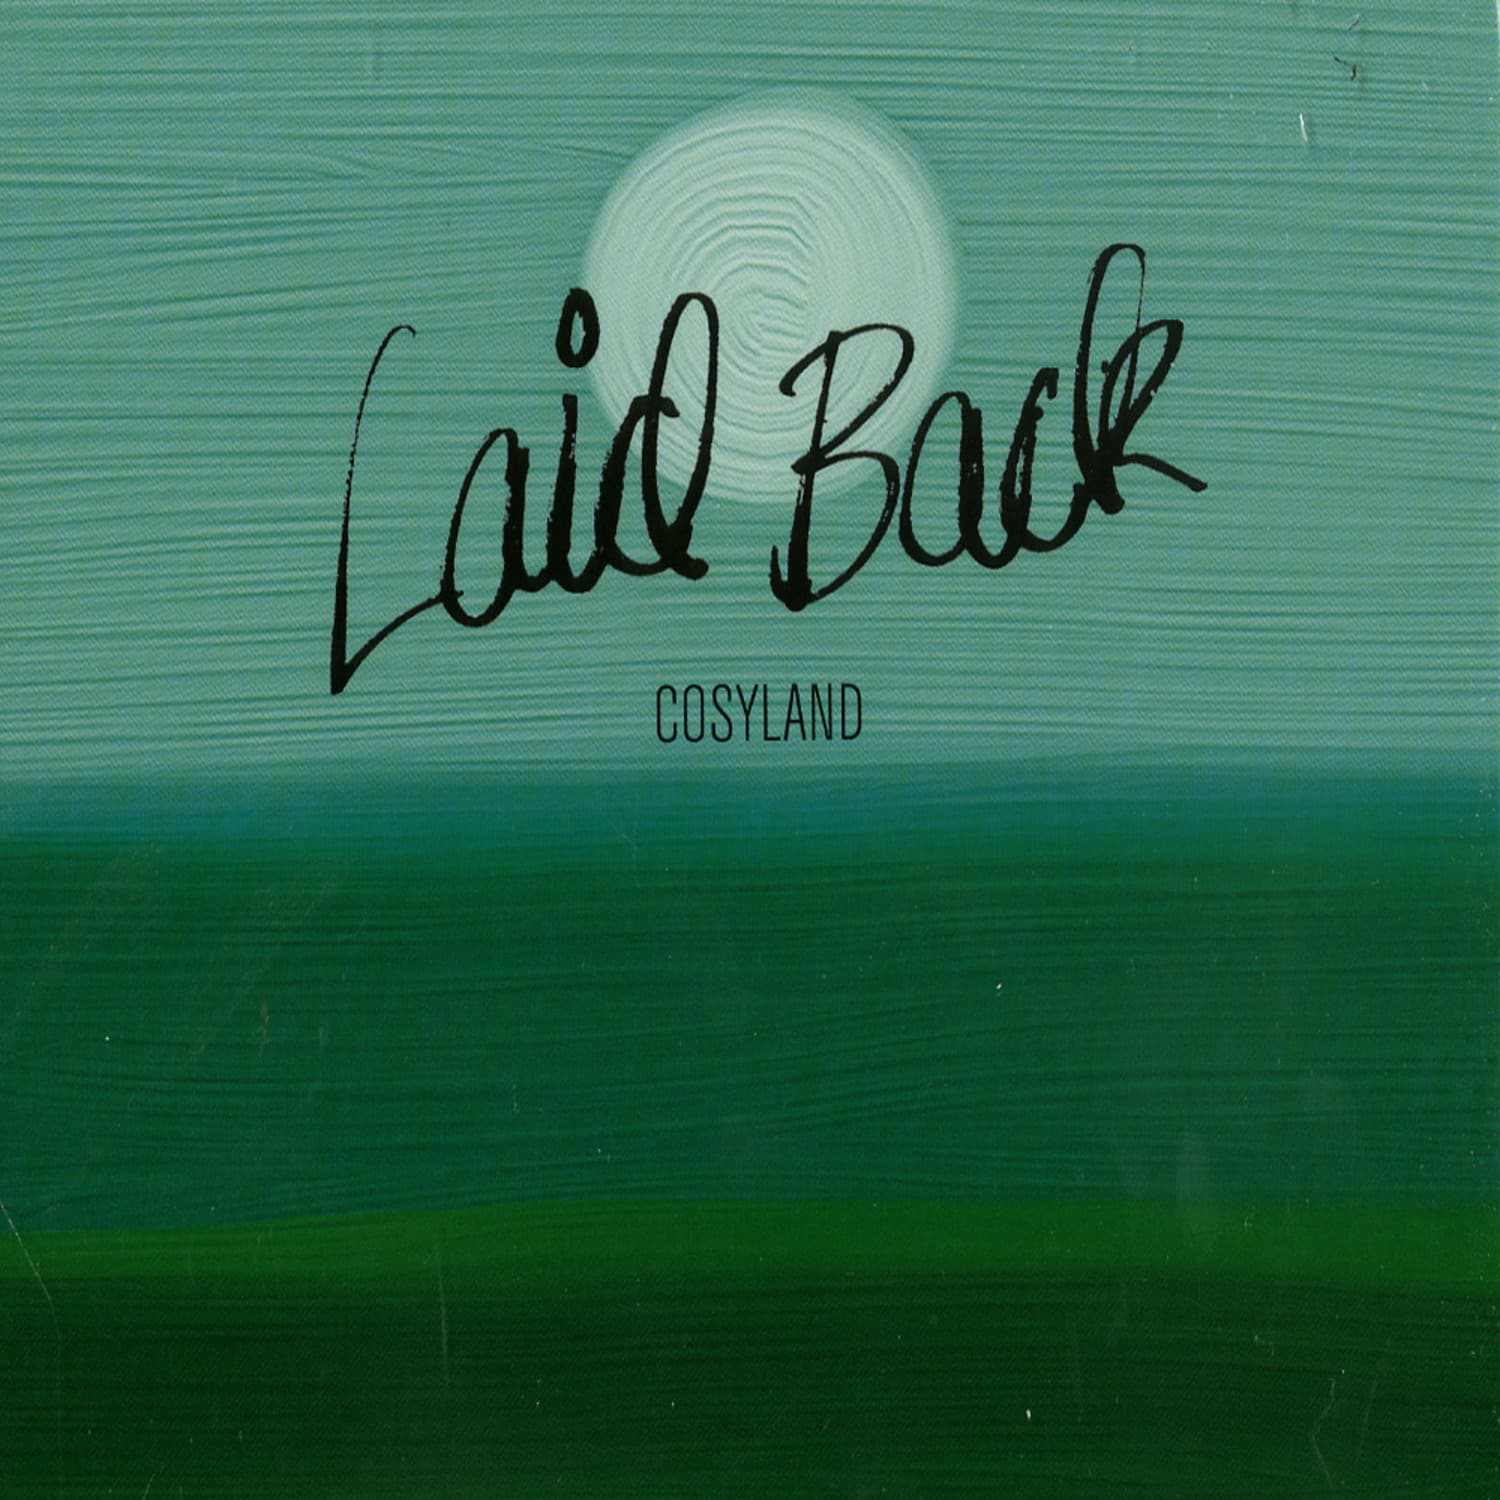 Laid Back - COSYLAND, GET LAID BACK 